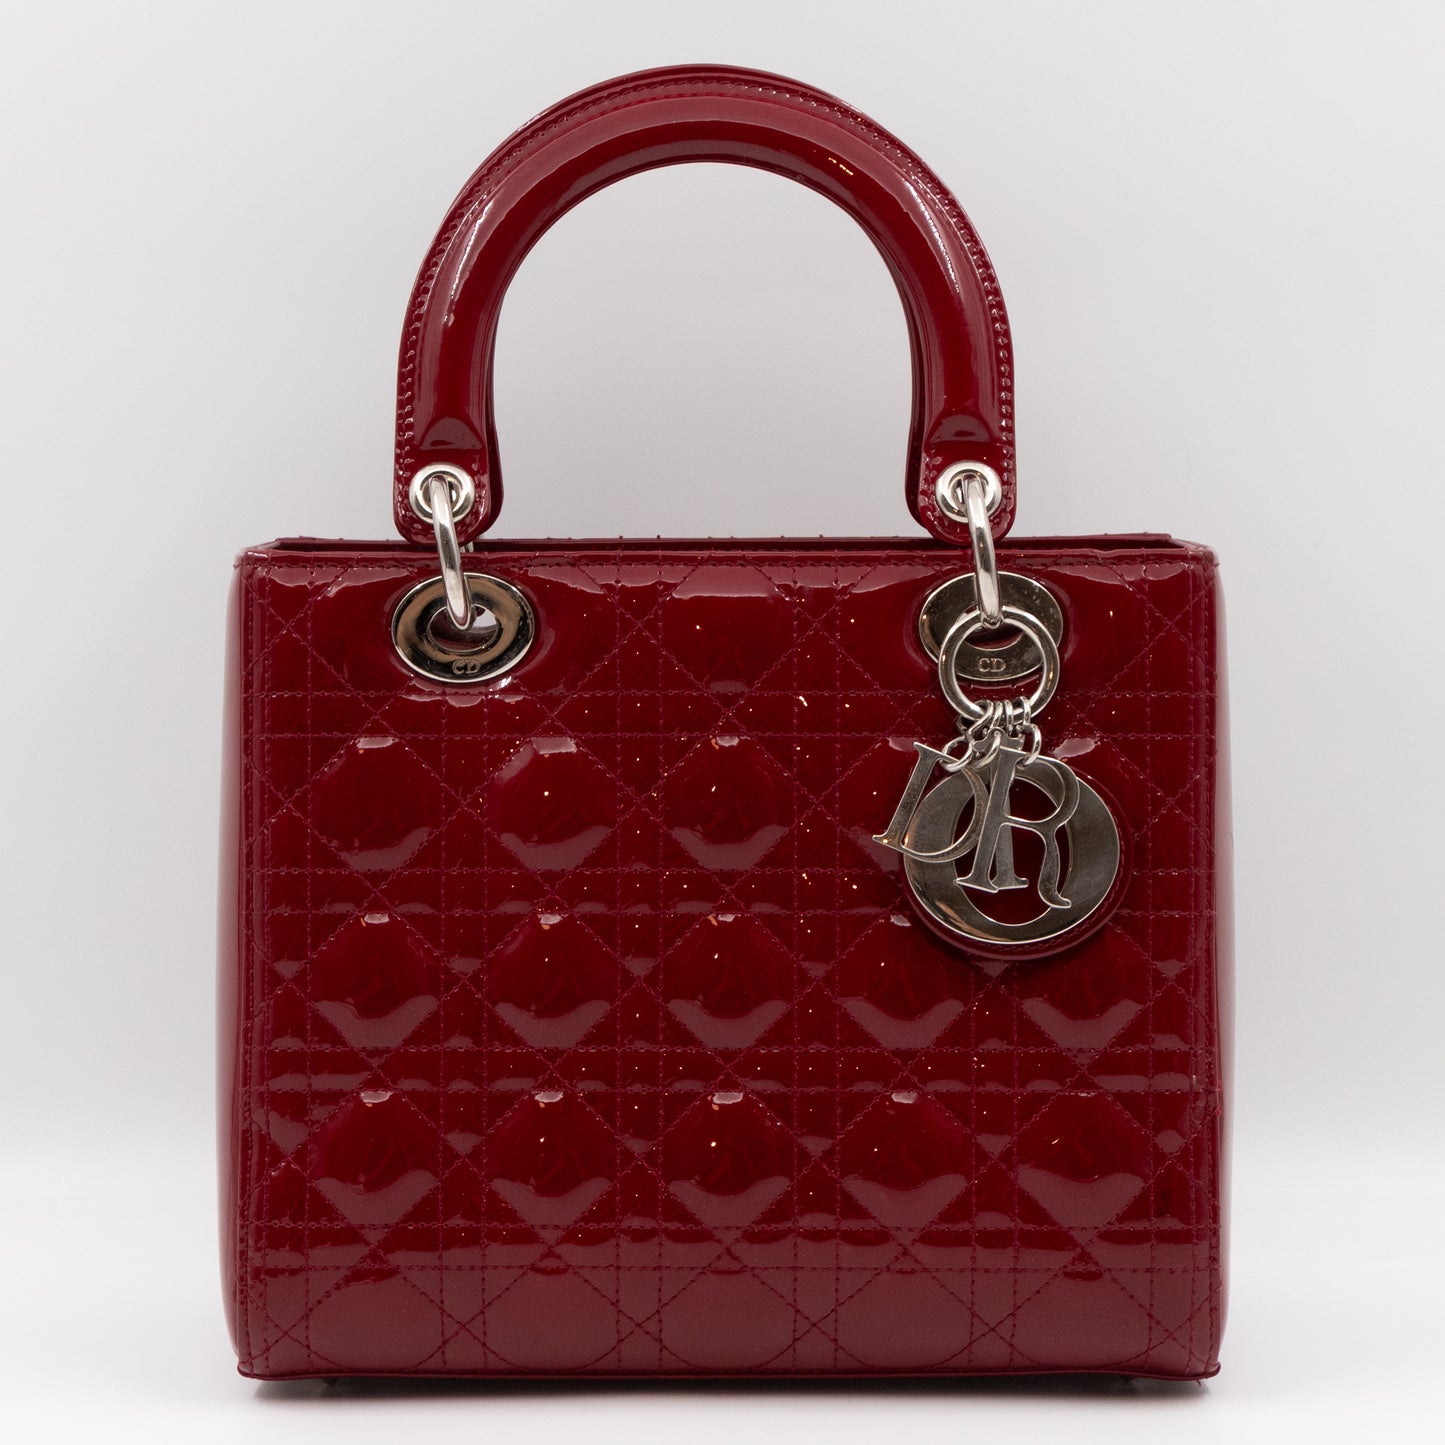 Lady Dior Medium Dark Red Patent Leather